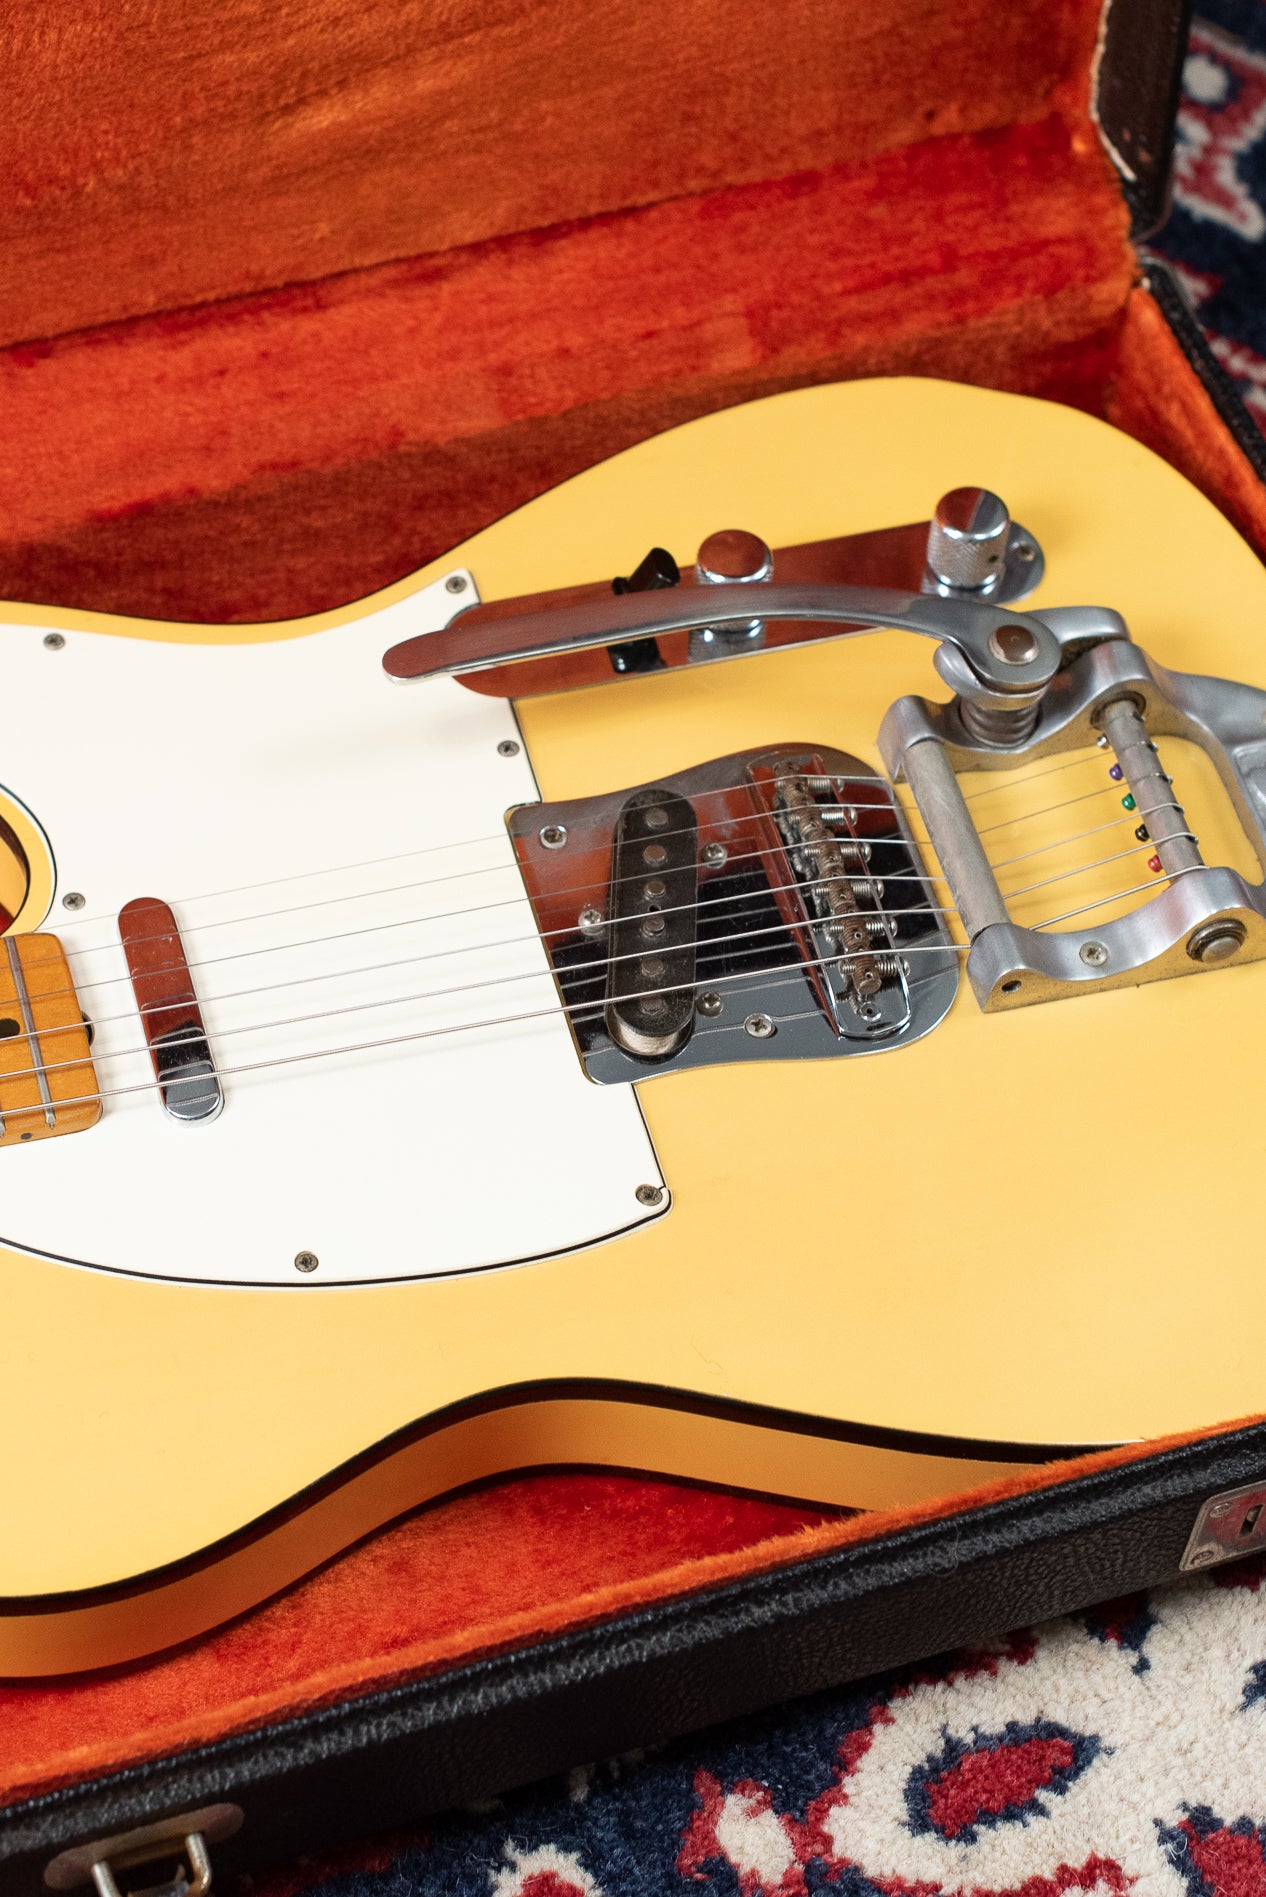 1968 Fender Telecaster Custom Bigsby Black Binding